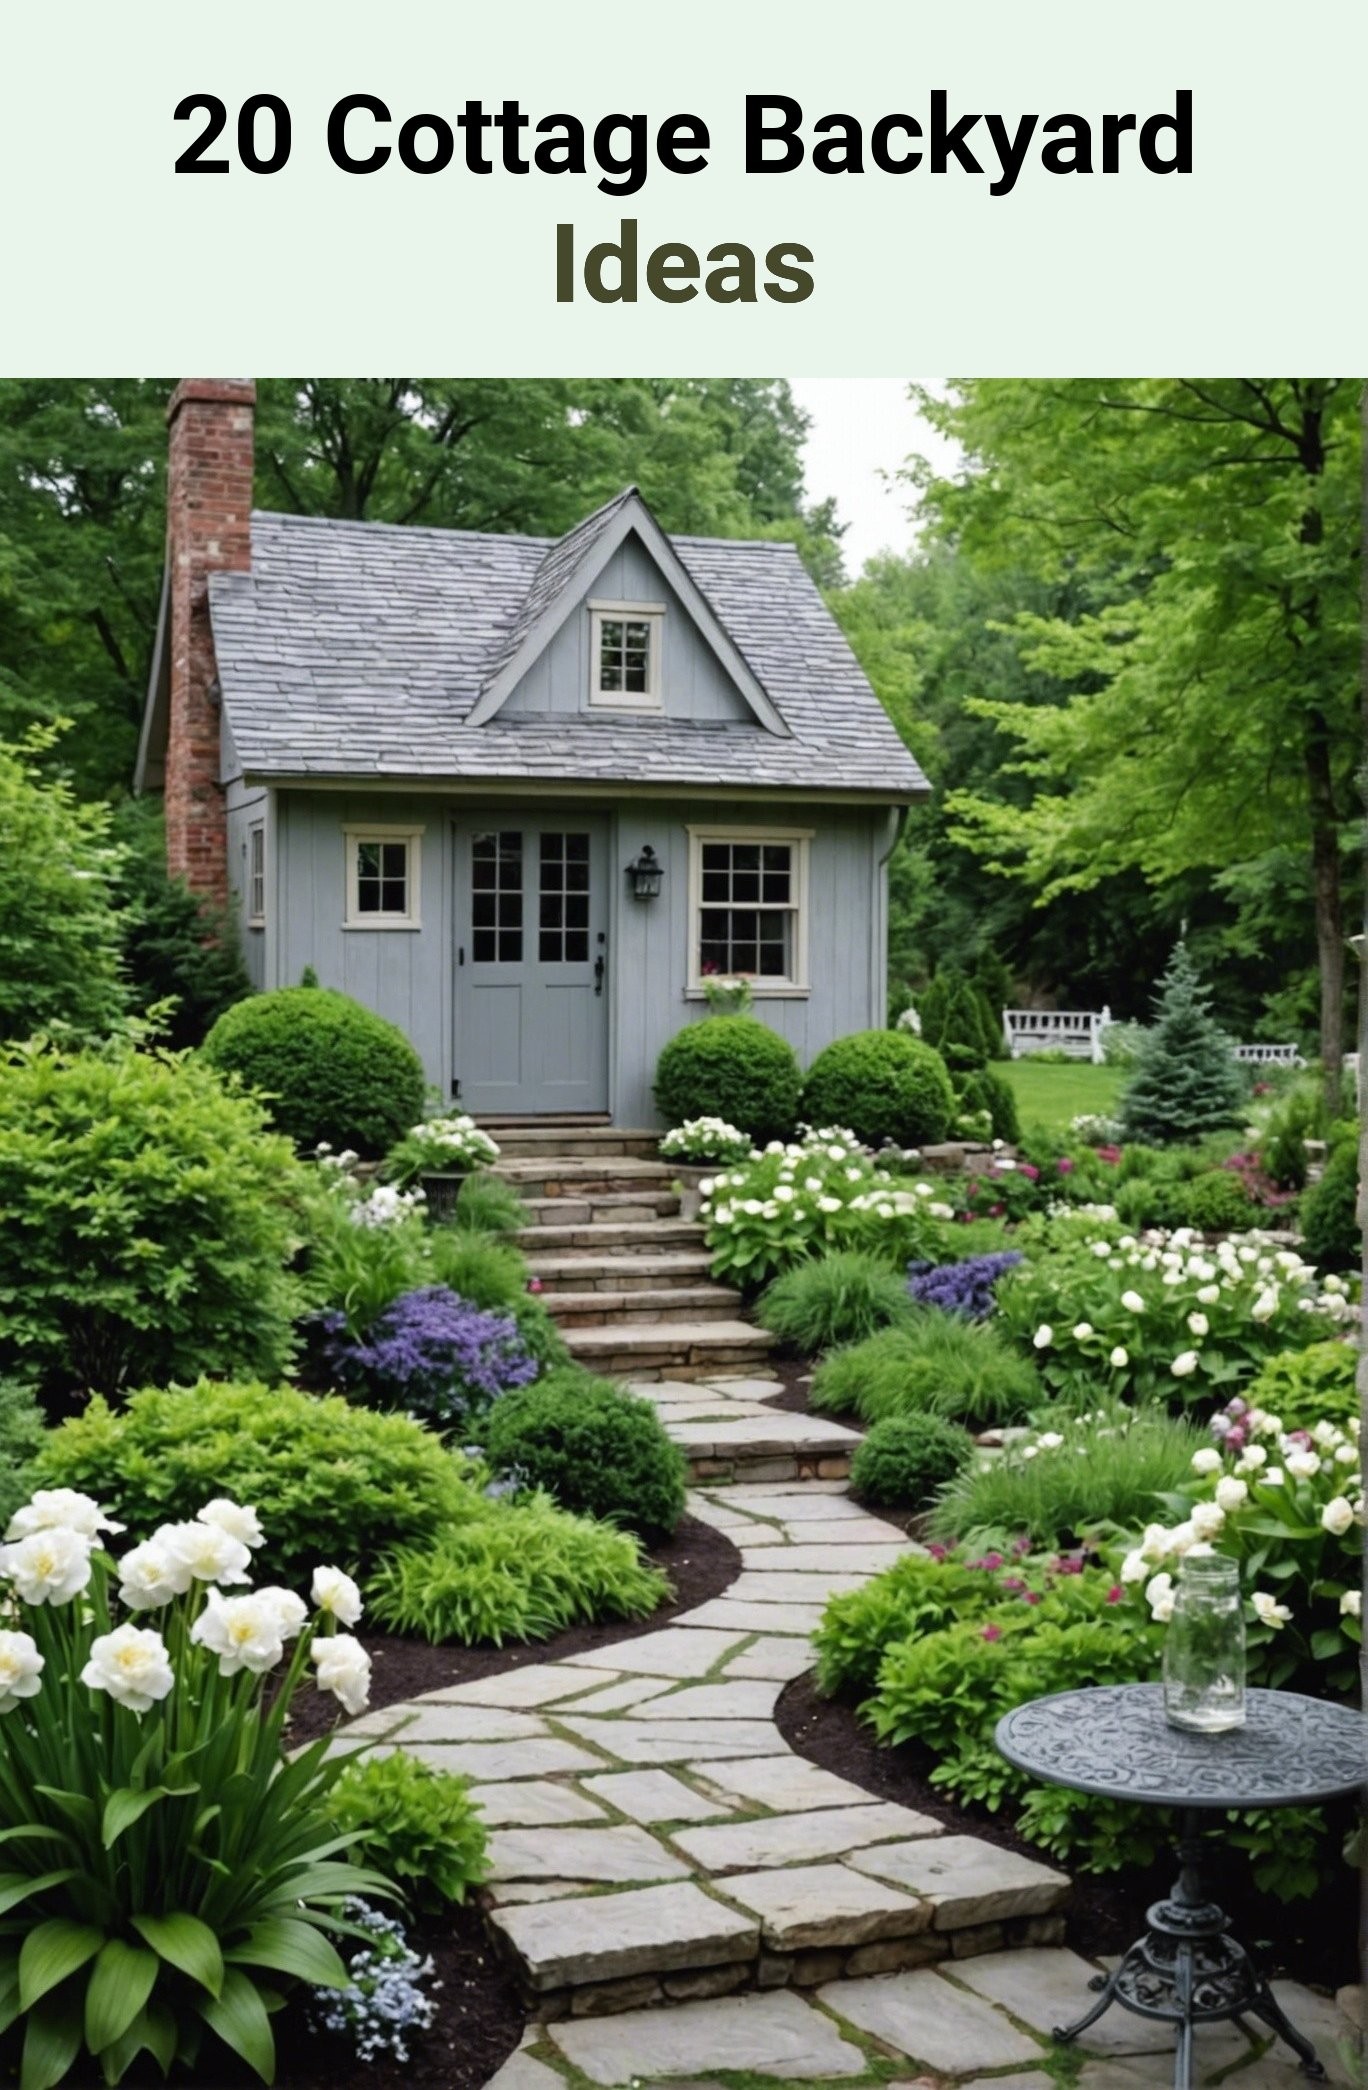 20 Cottage Backyard Ideas